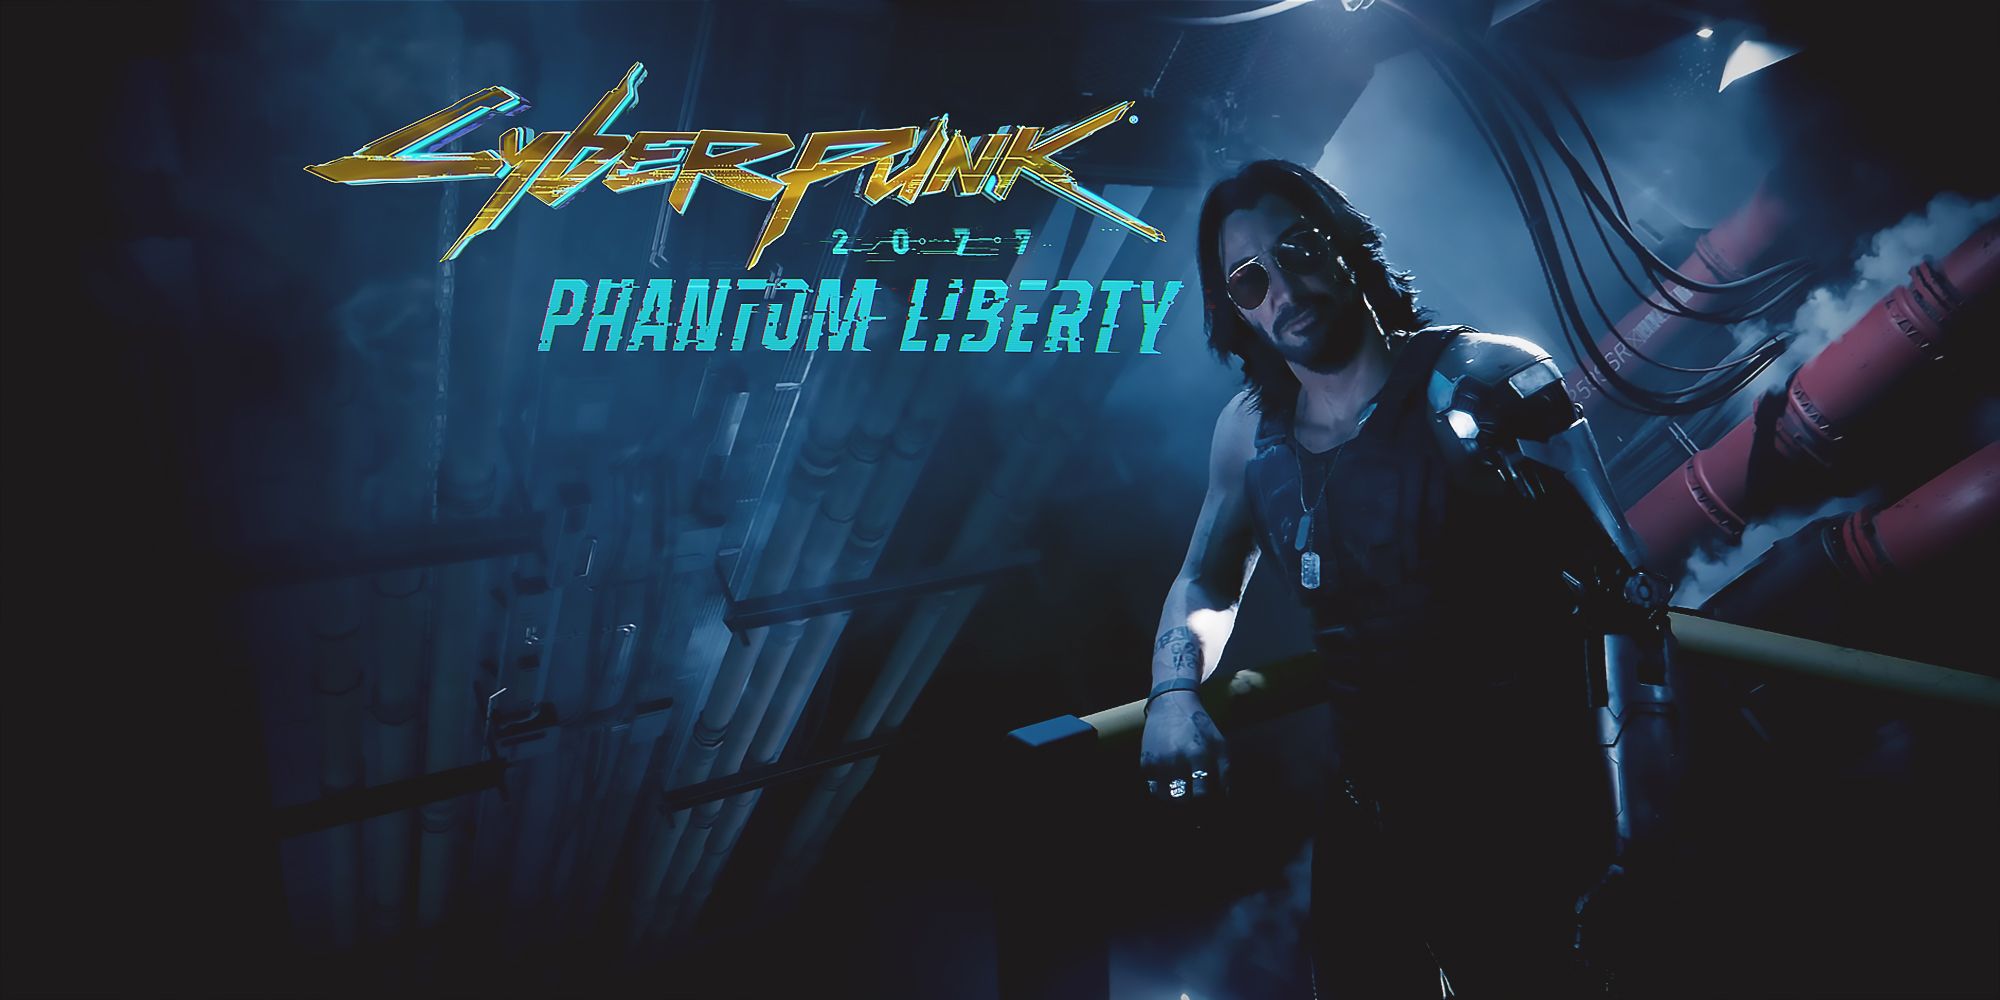 Cyberpunk 2077 Phantom Liberty Keanu Reeves as Johnny Silverhand leaning on pipe rail